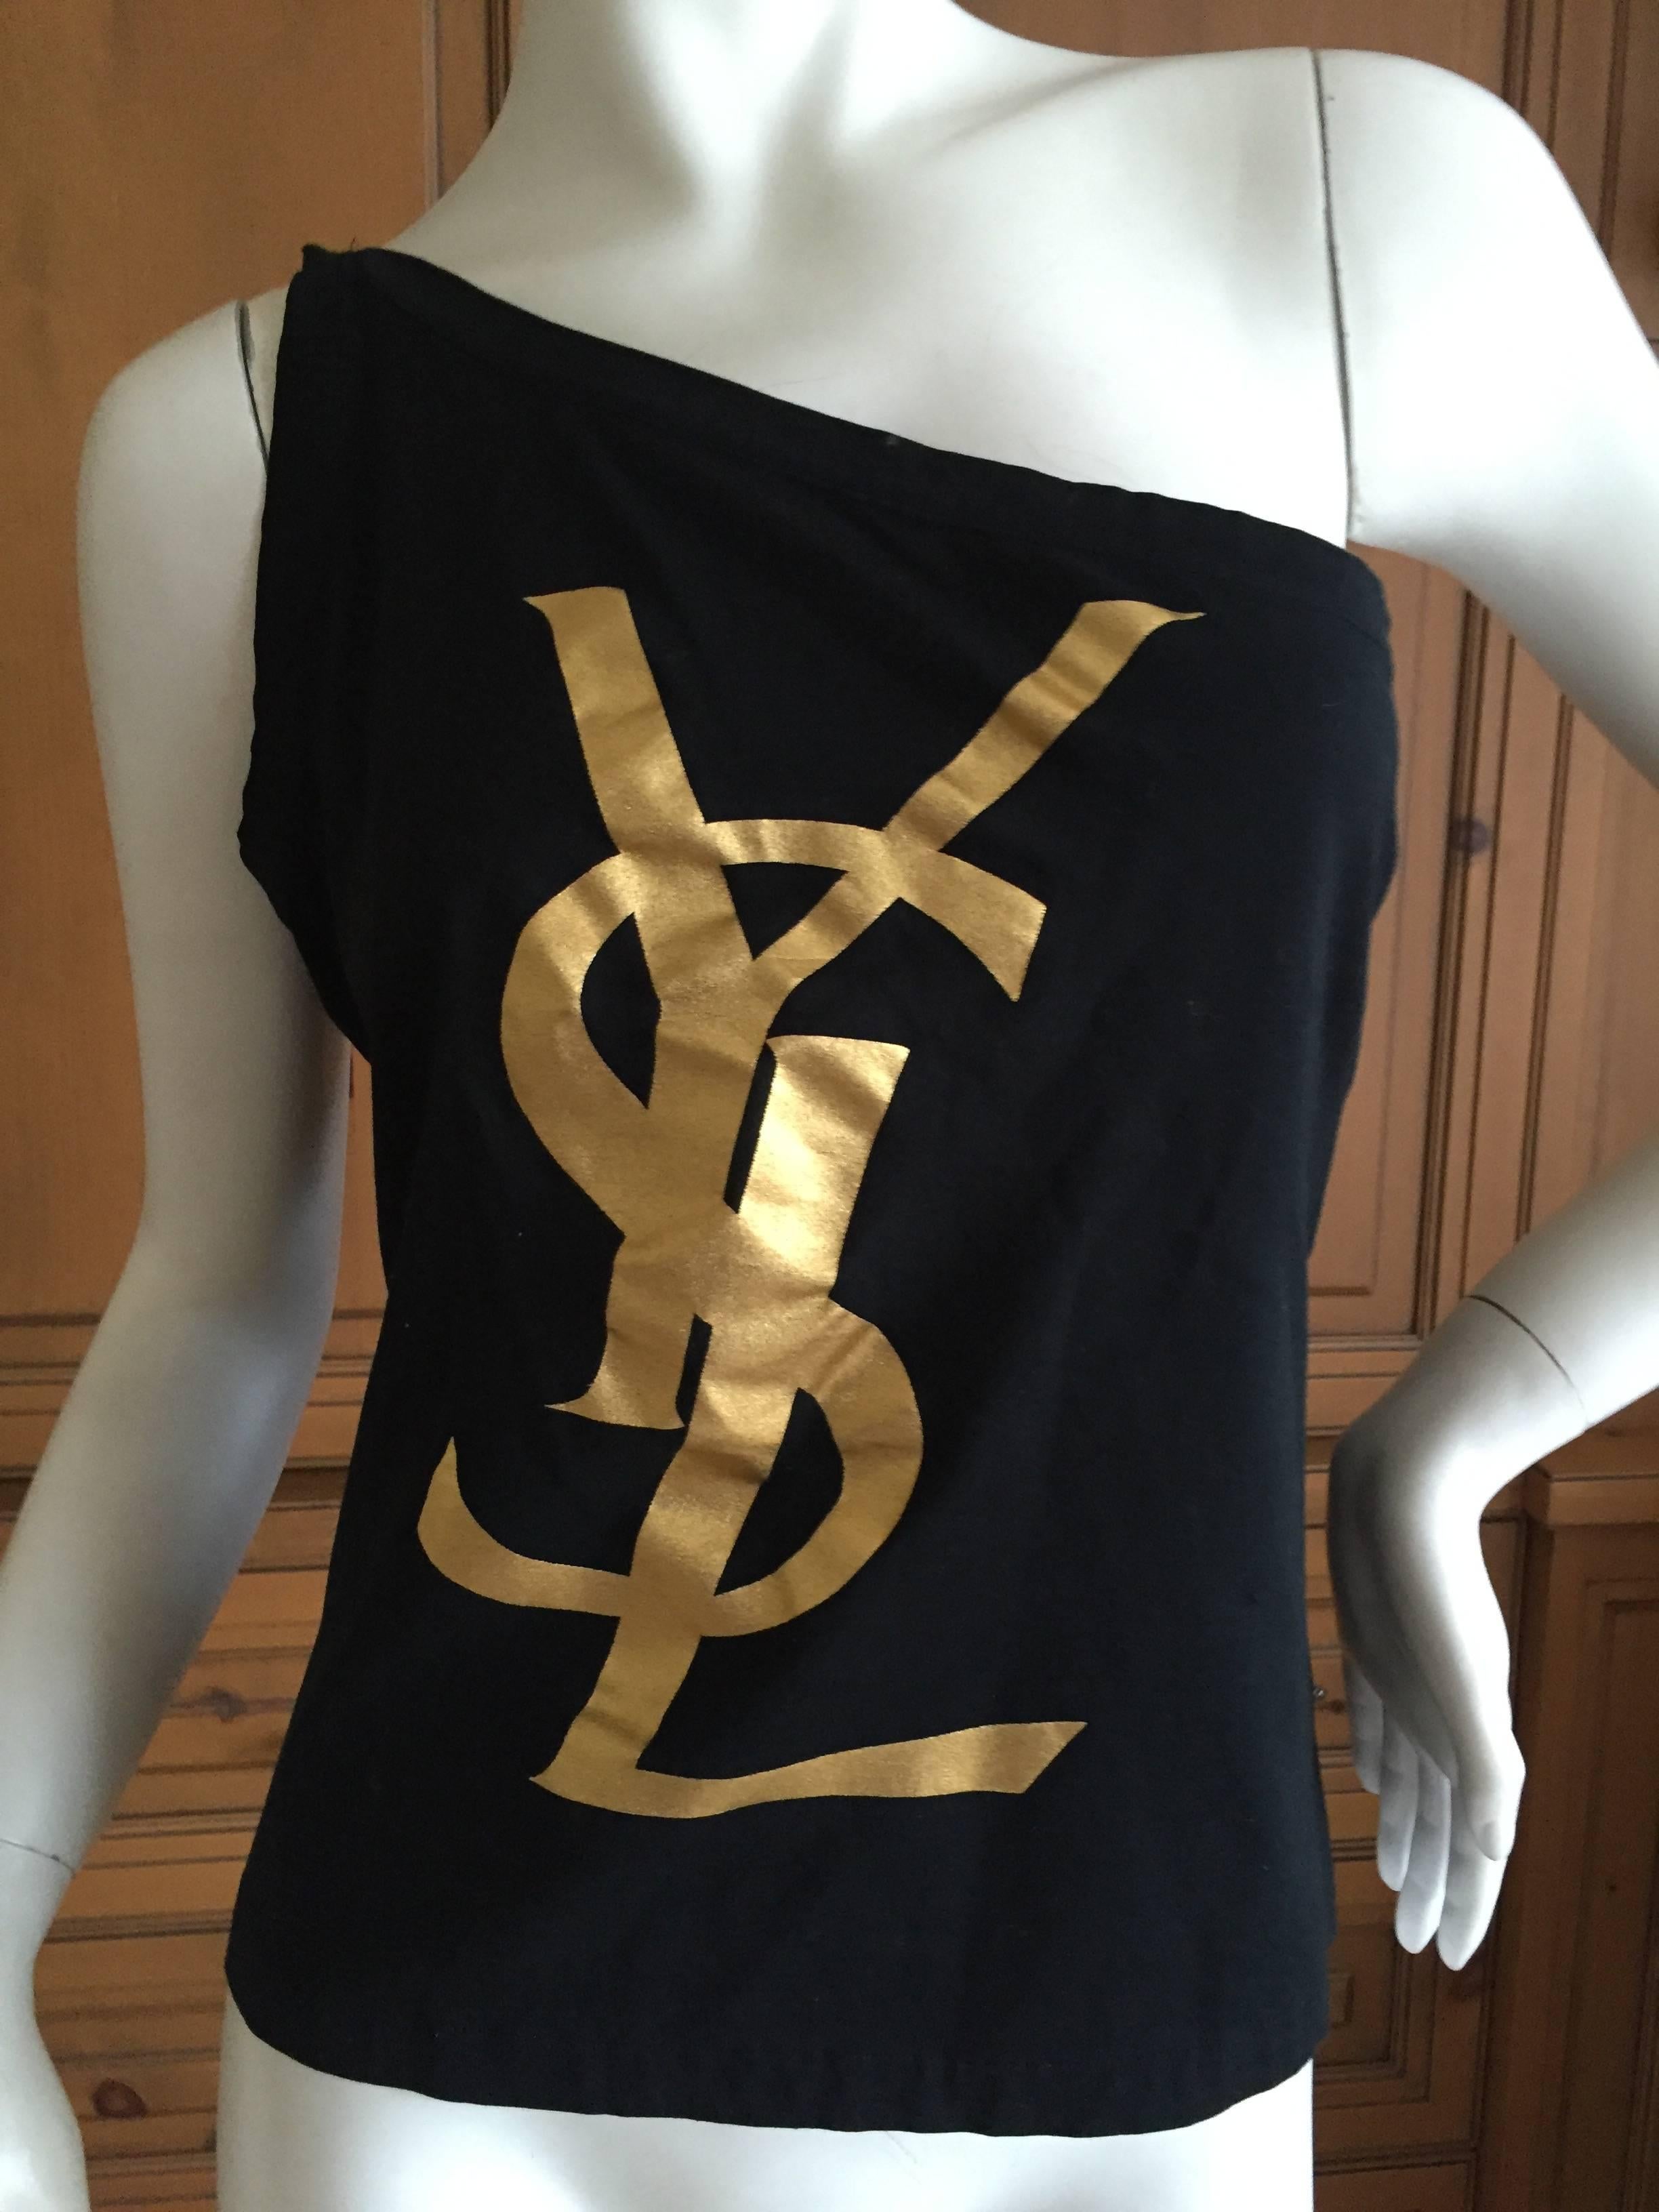 Wonderful vintage one shoulder top featuring the Cassandre designed YSL logo in gold.